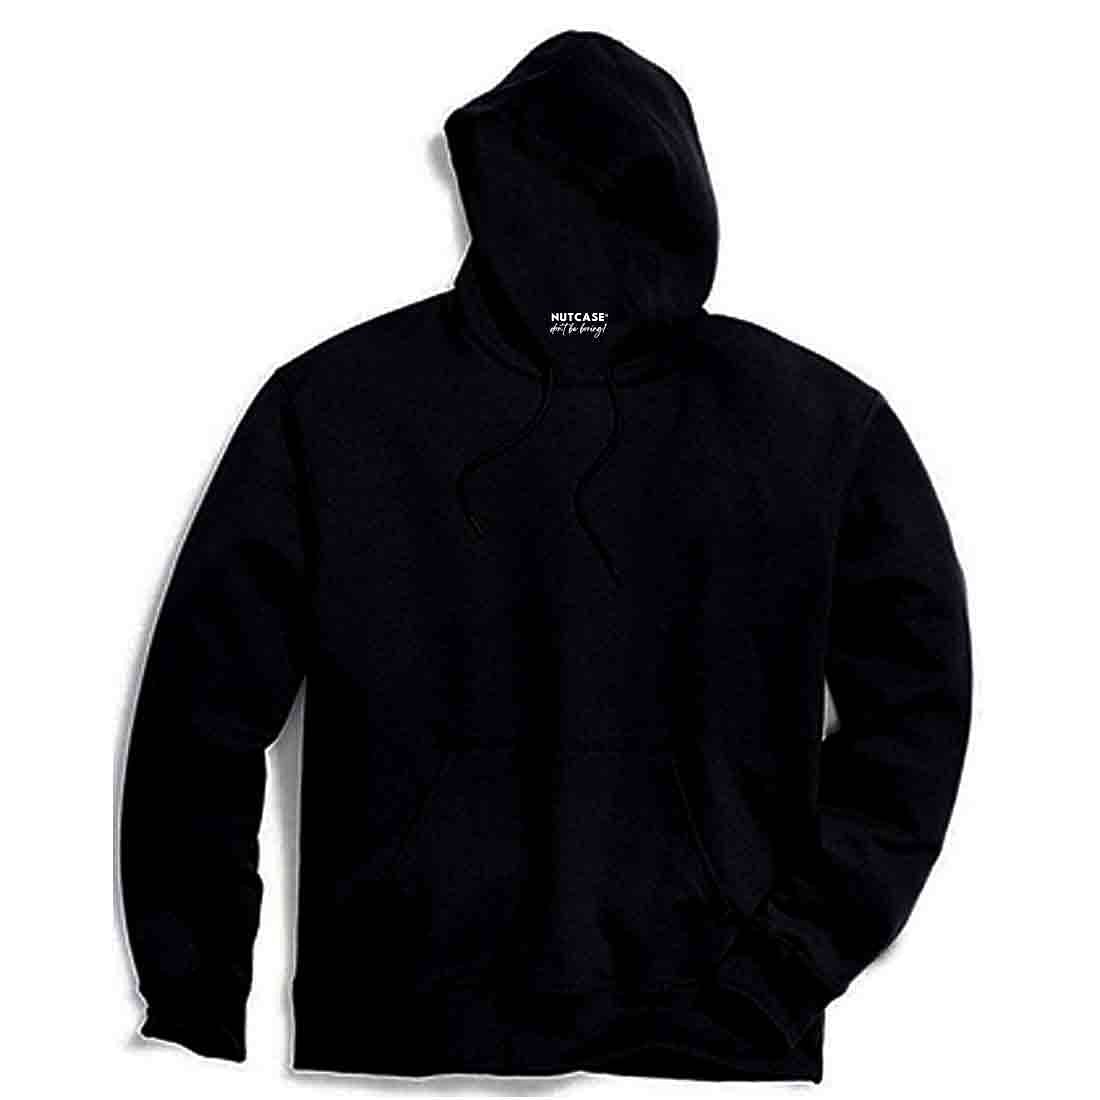 Nutcase hoodie For Men with name on back print ( Unisex) - EYE Nutcase